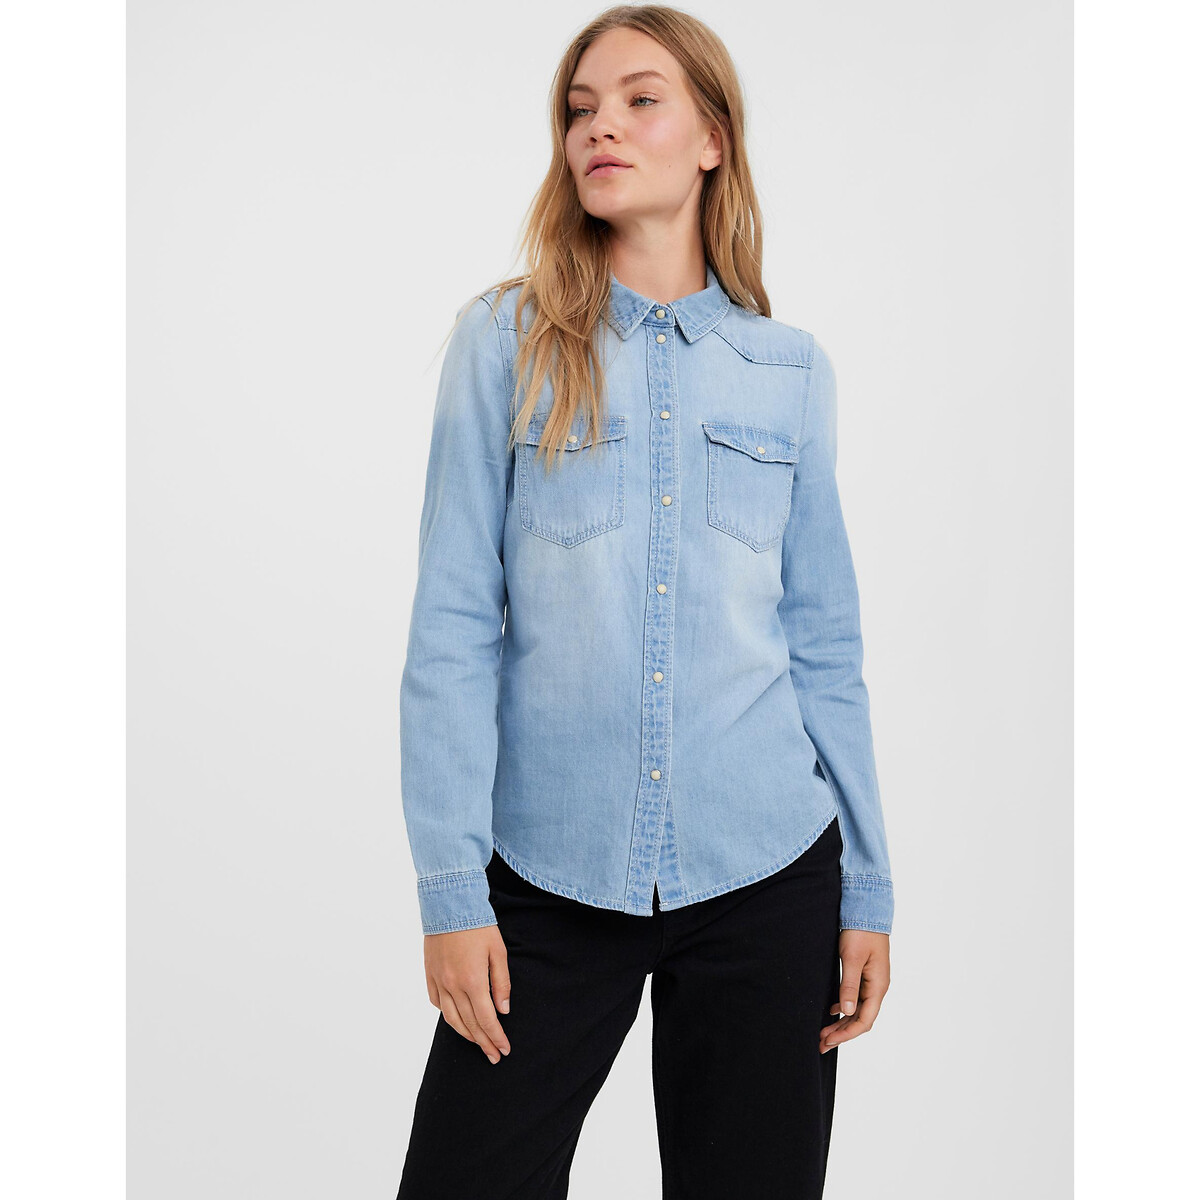 Рубашка Из джинсовой ткани L синий LaRedoute, размер L - фото 1